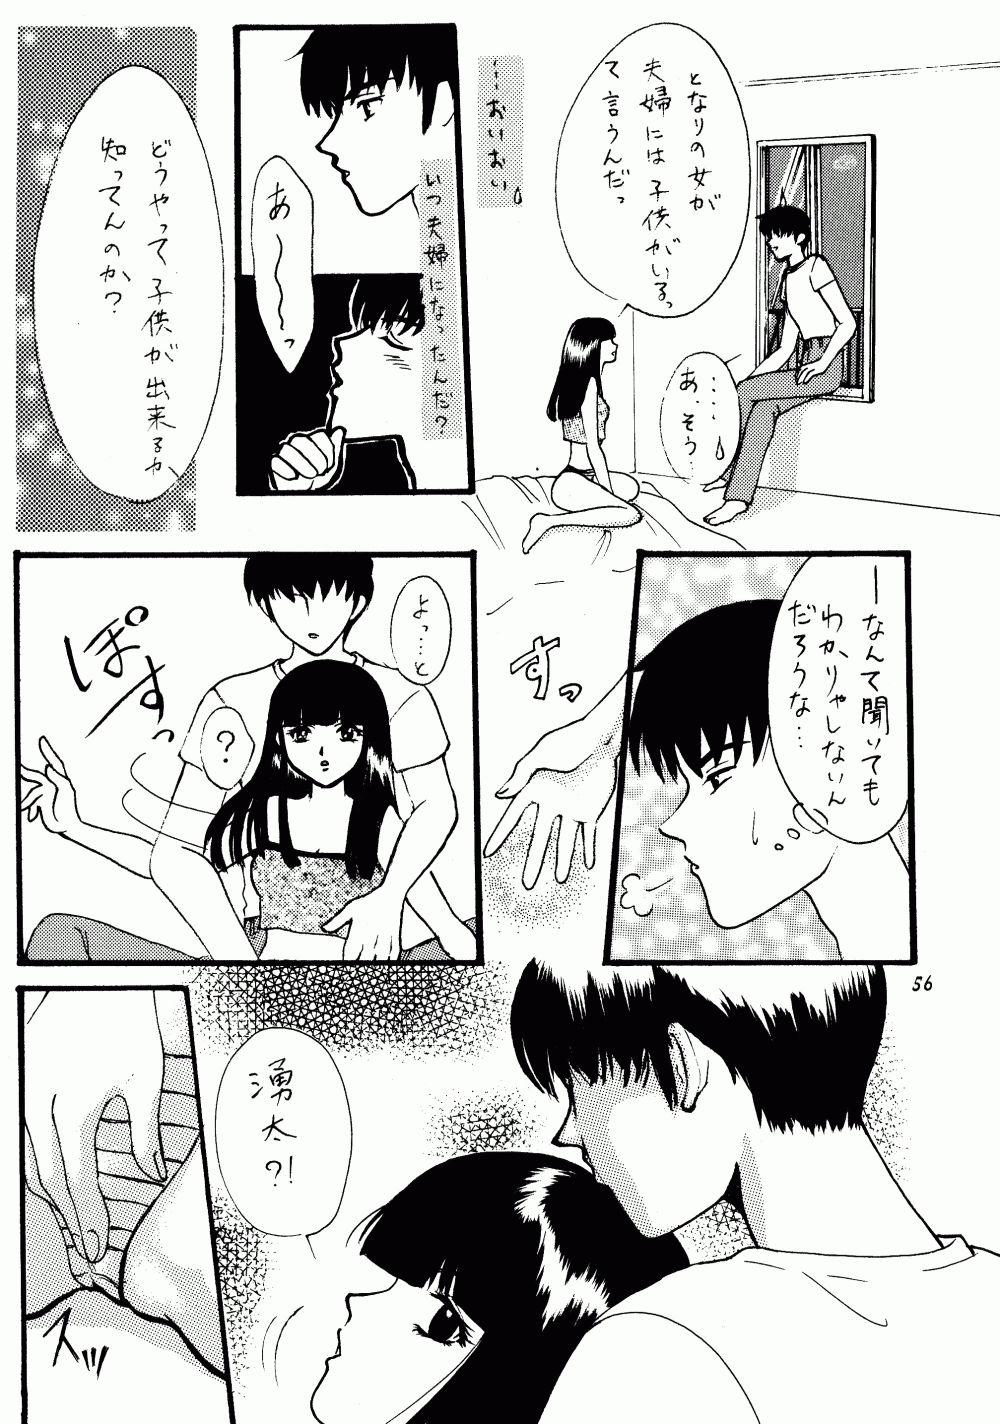 Impression 3 hentai manga picture 47